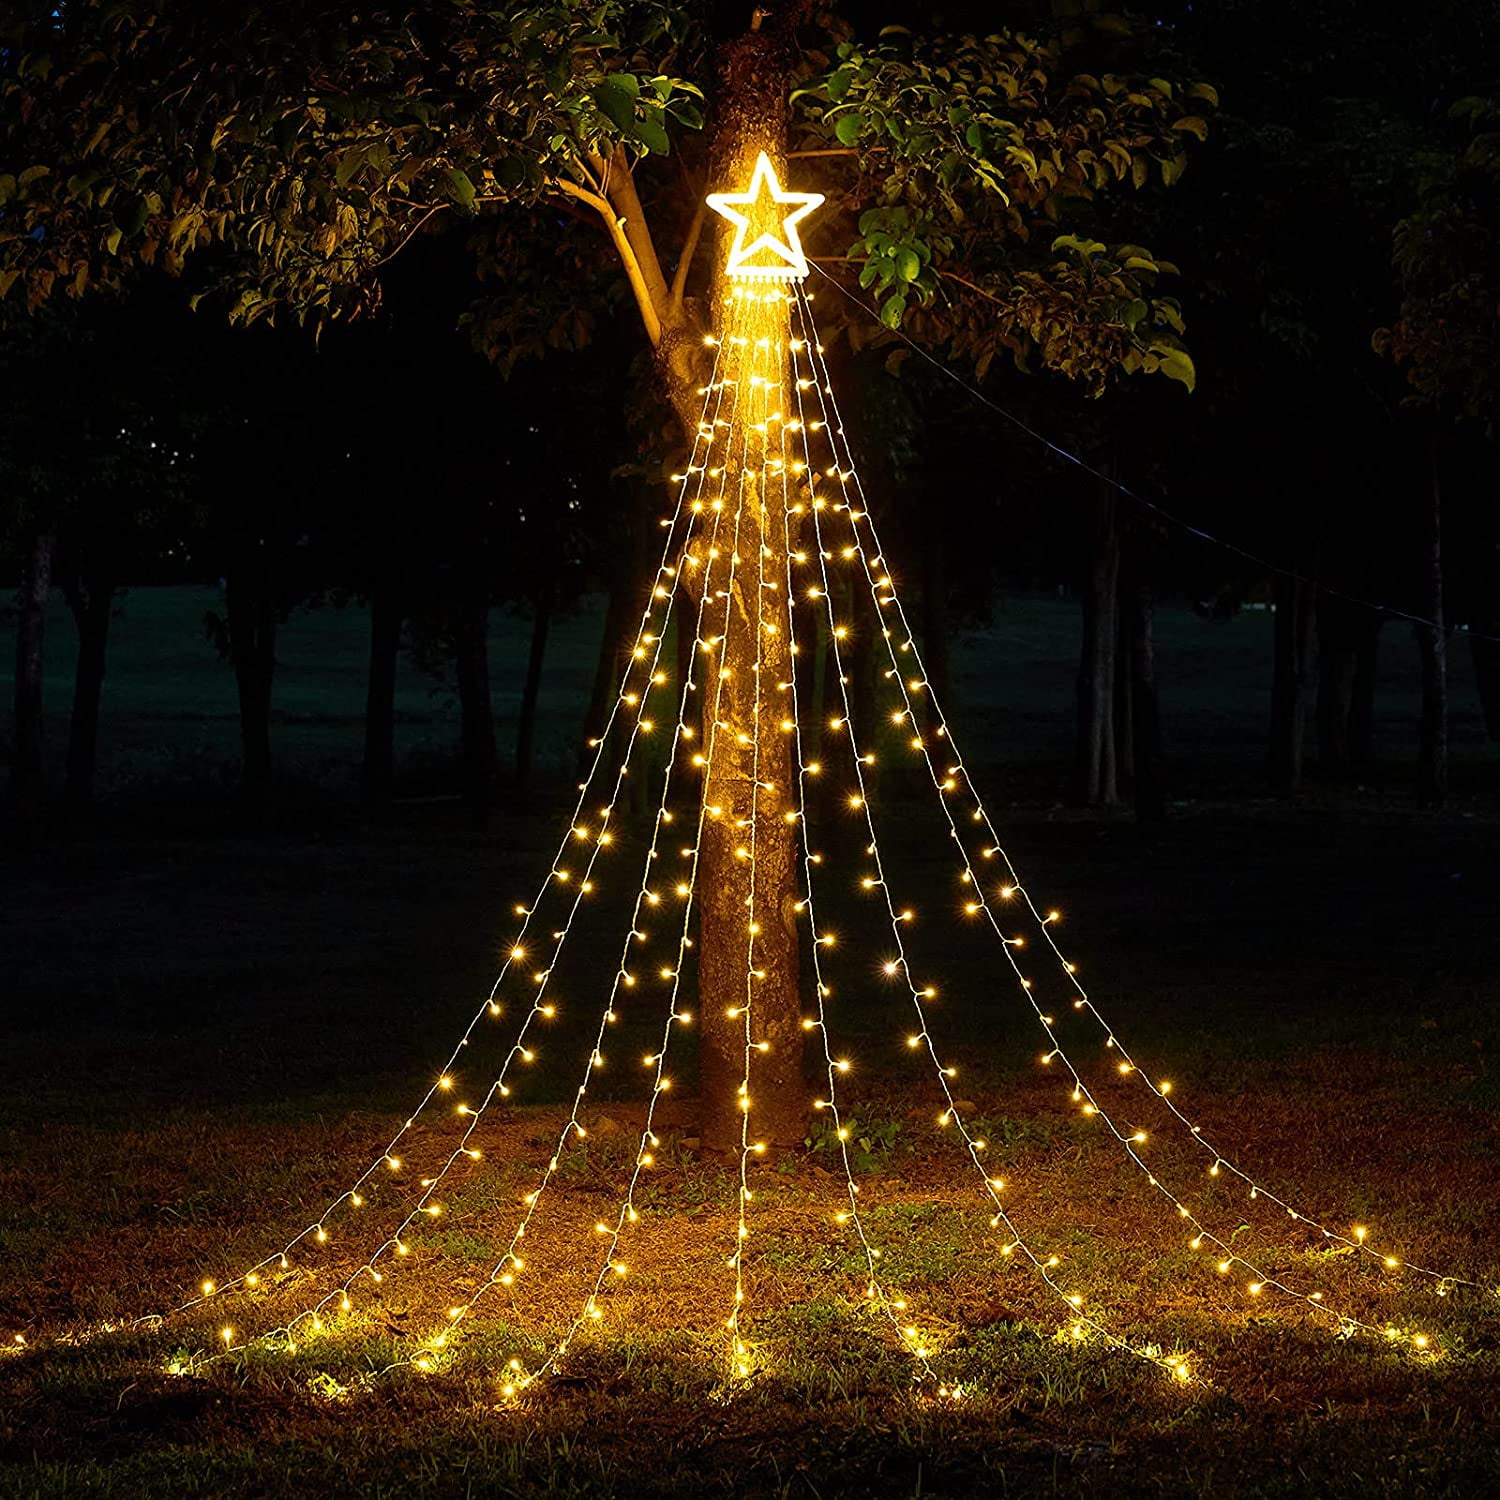 20 LED Christmas Bell Lights String Waterproof Outdoor Garden Yard Xmas Lamp New 